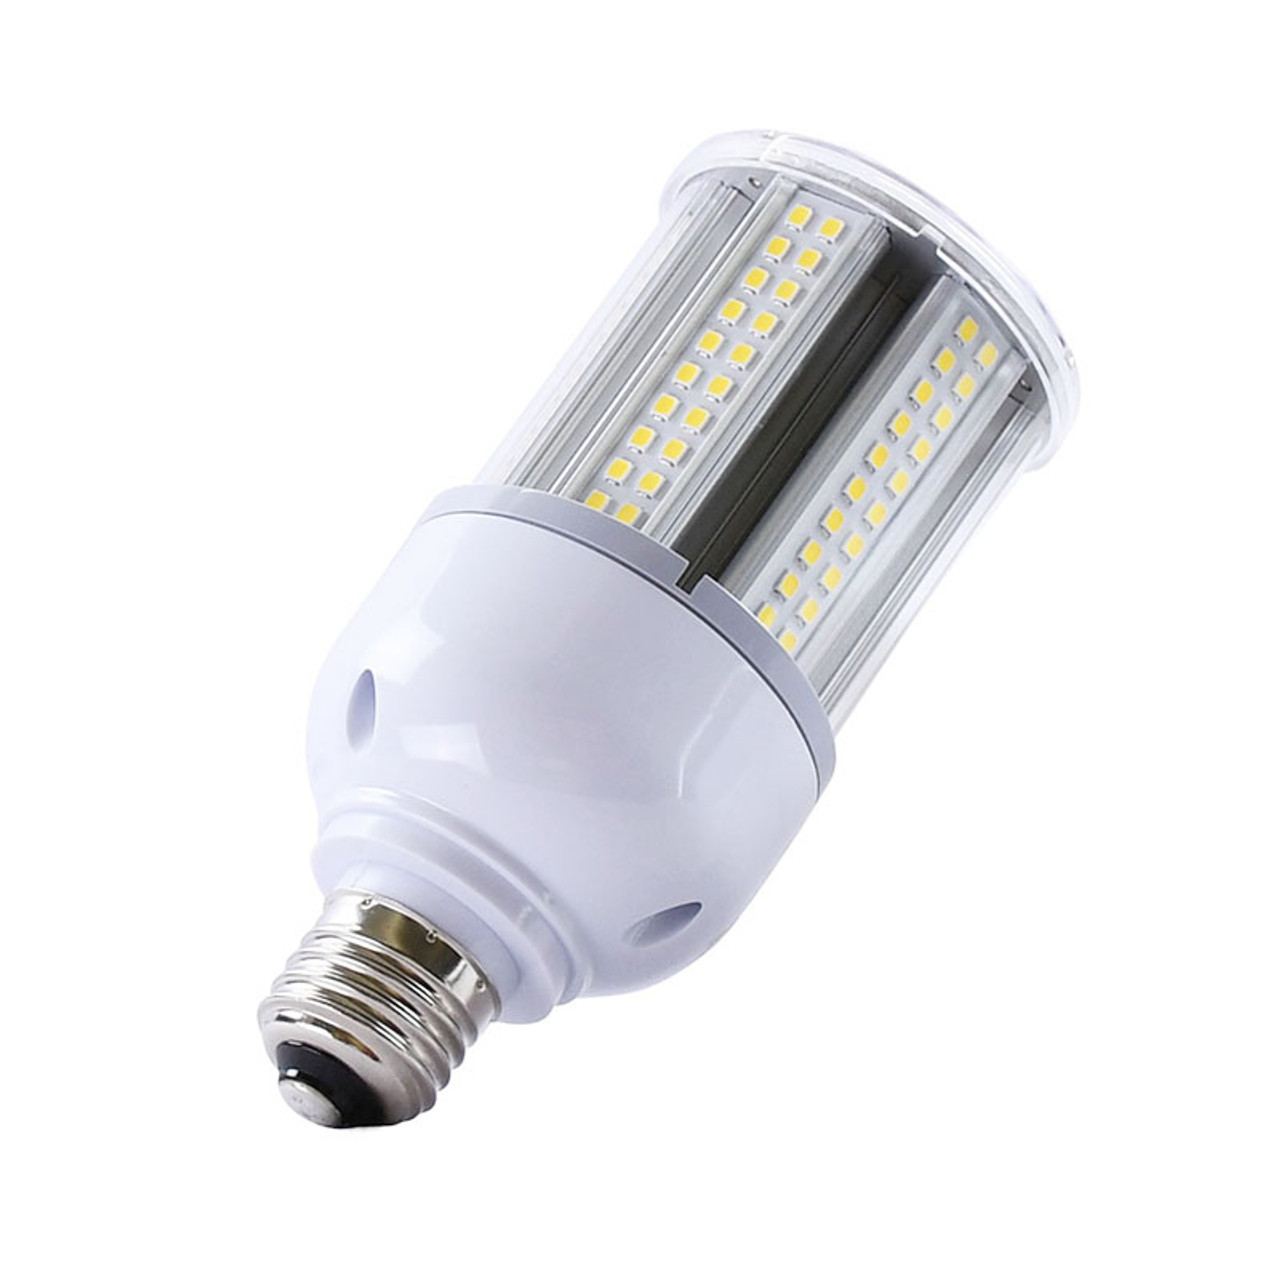 15 Watt IP64 LED Corn Bulb, Replaces 100 HID, 2,250 Lumen, 5 Year Warranty. - LED Global Supply